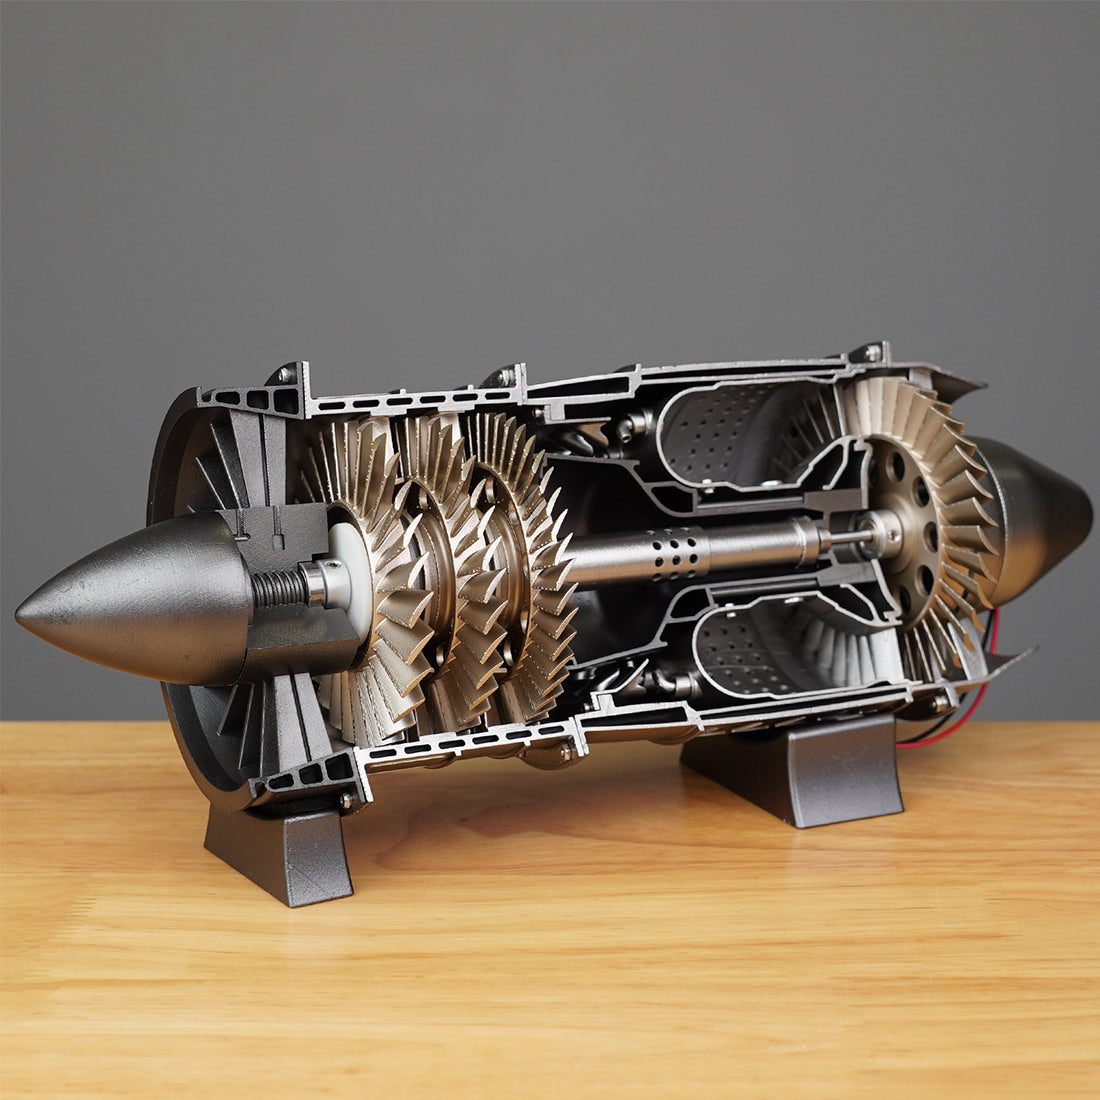 SKYMECHMAN WP-85 Build Your Own Turbojet Engine Model Kits Plastic